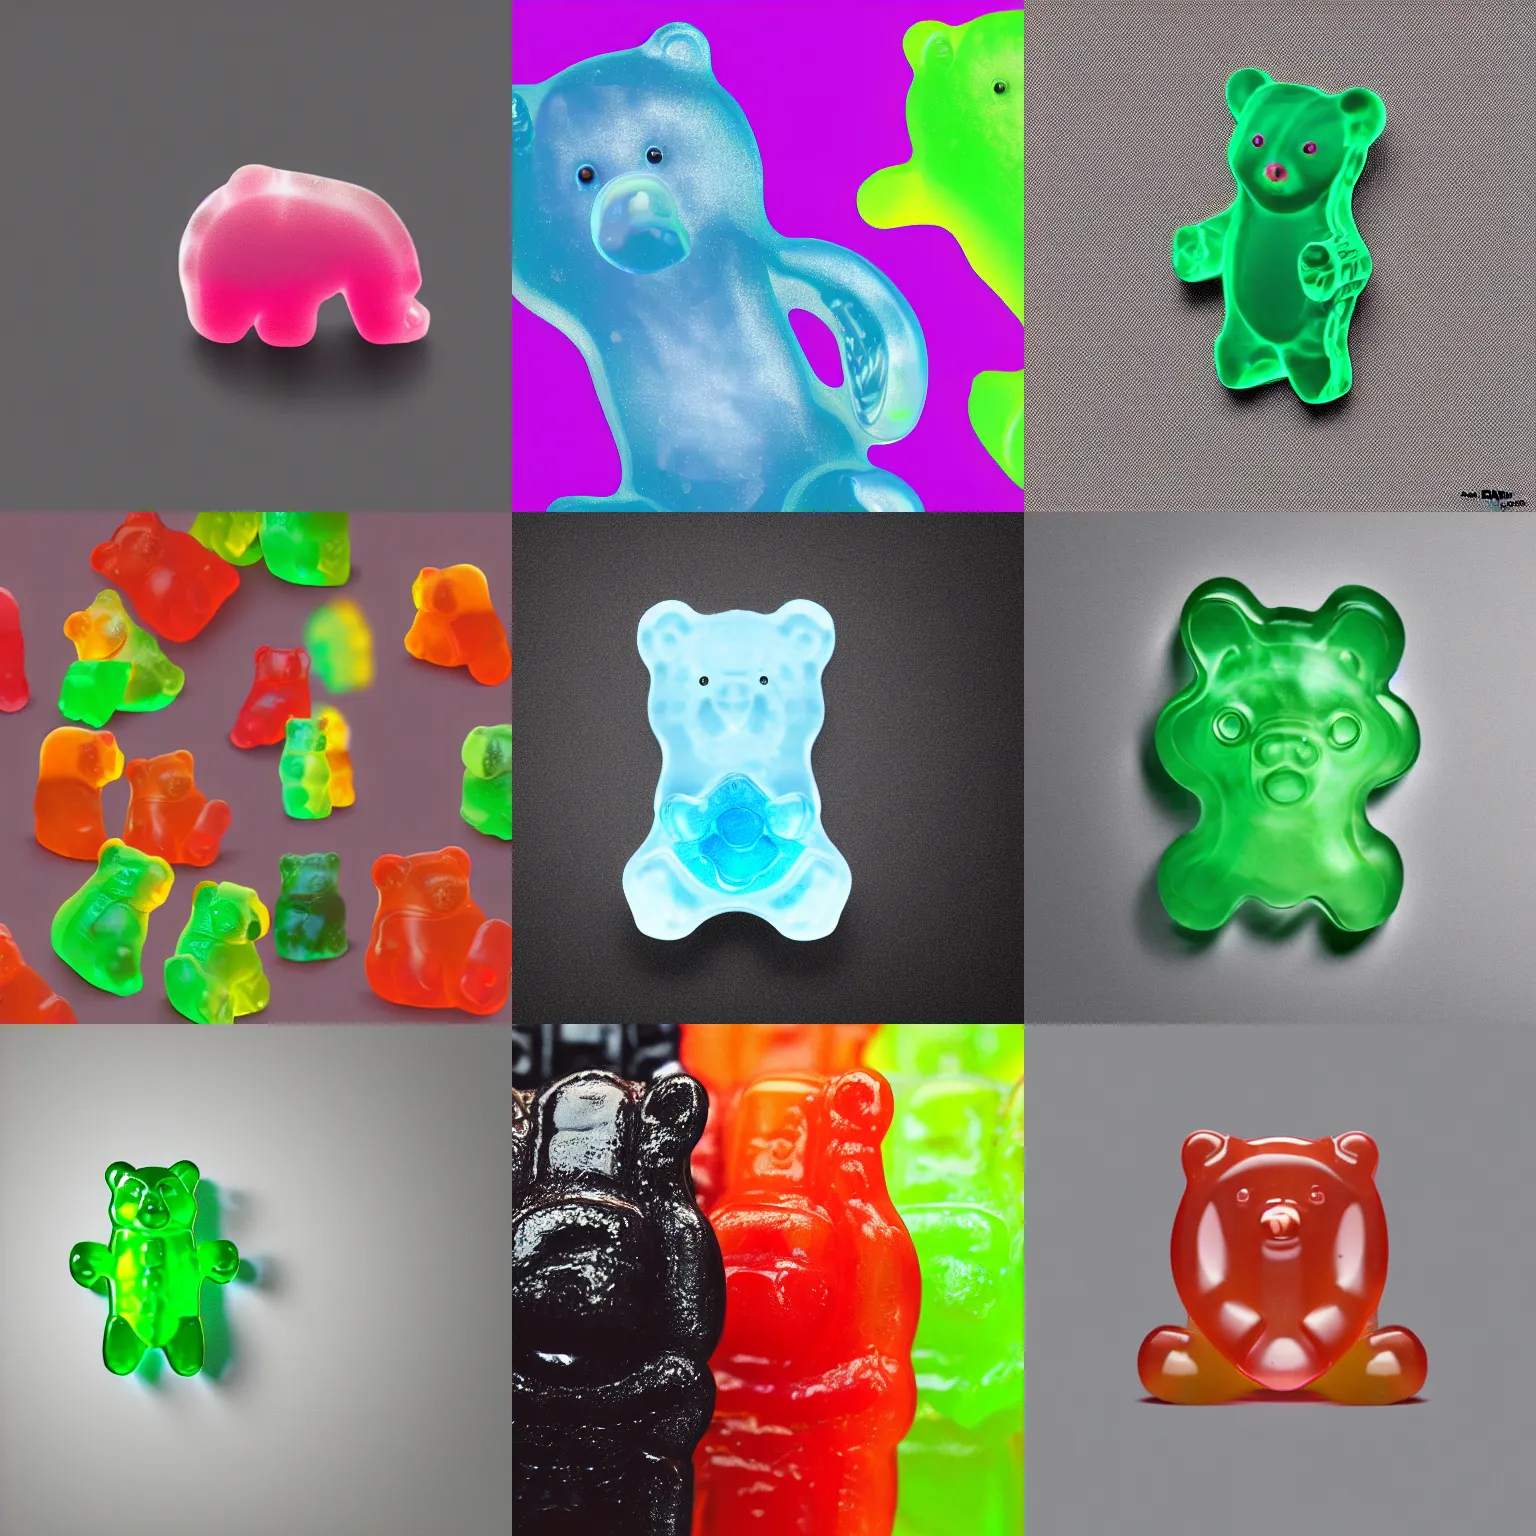 Prompt: A semi-translucent gummy bear, digital are